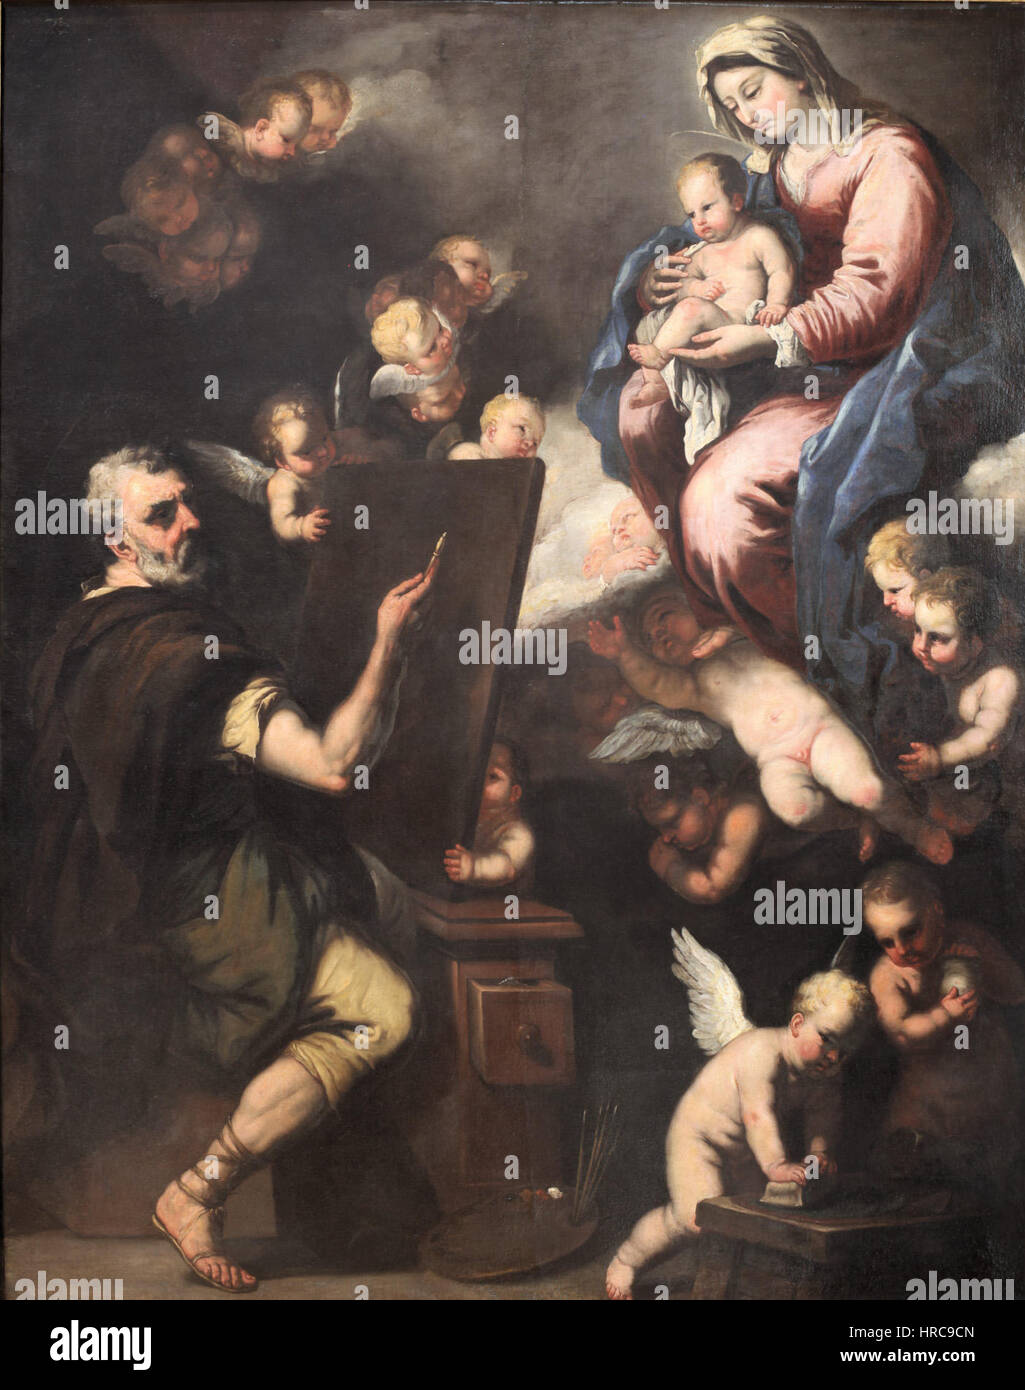 Saint Lucas painting the Virgin-Luca Giordano-MBA Lyon A55-IMG 0374 Stock Photo